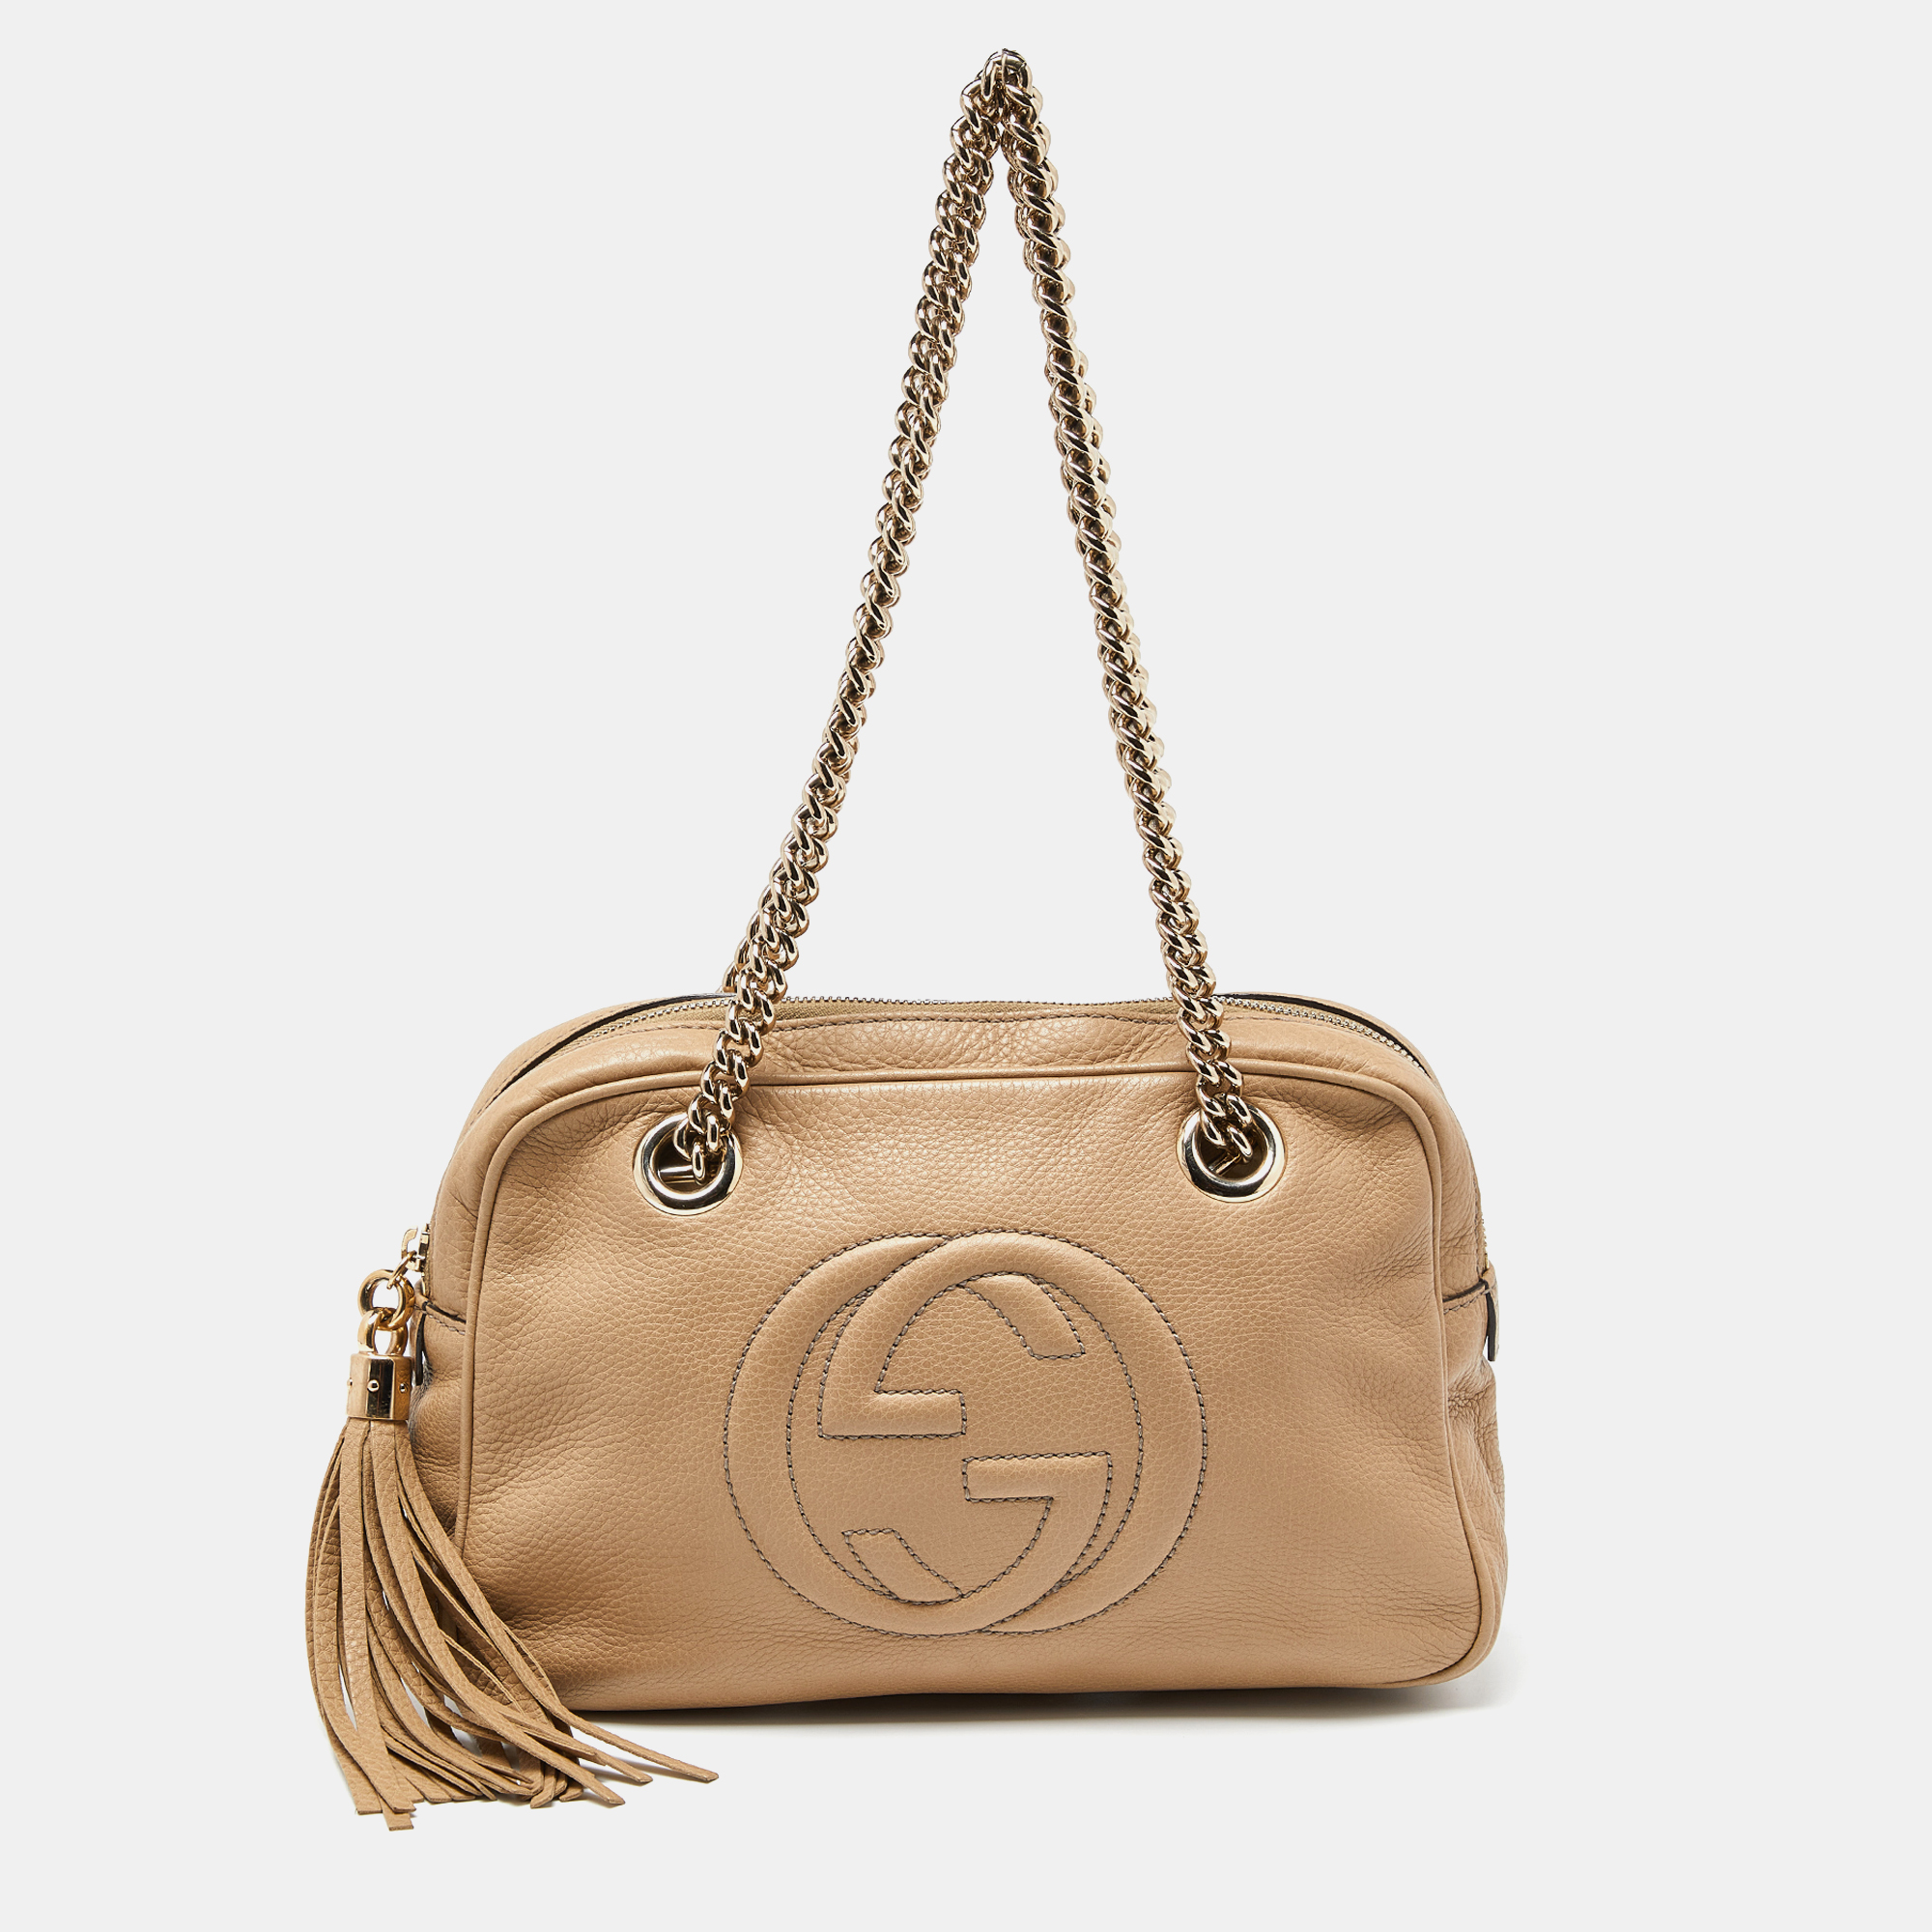 Pre-owned Gucci Beige Leather Medium Soho Chain Shoulder Bag